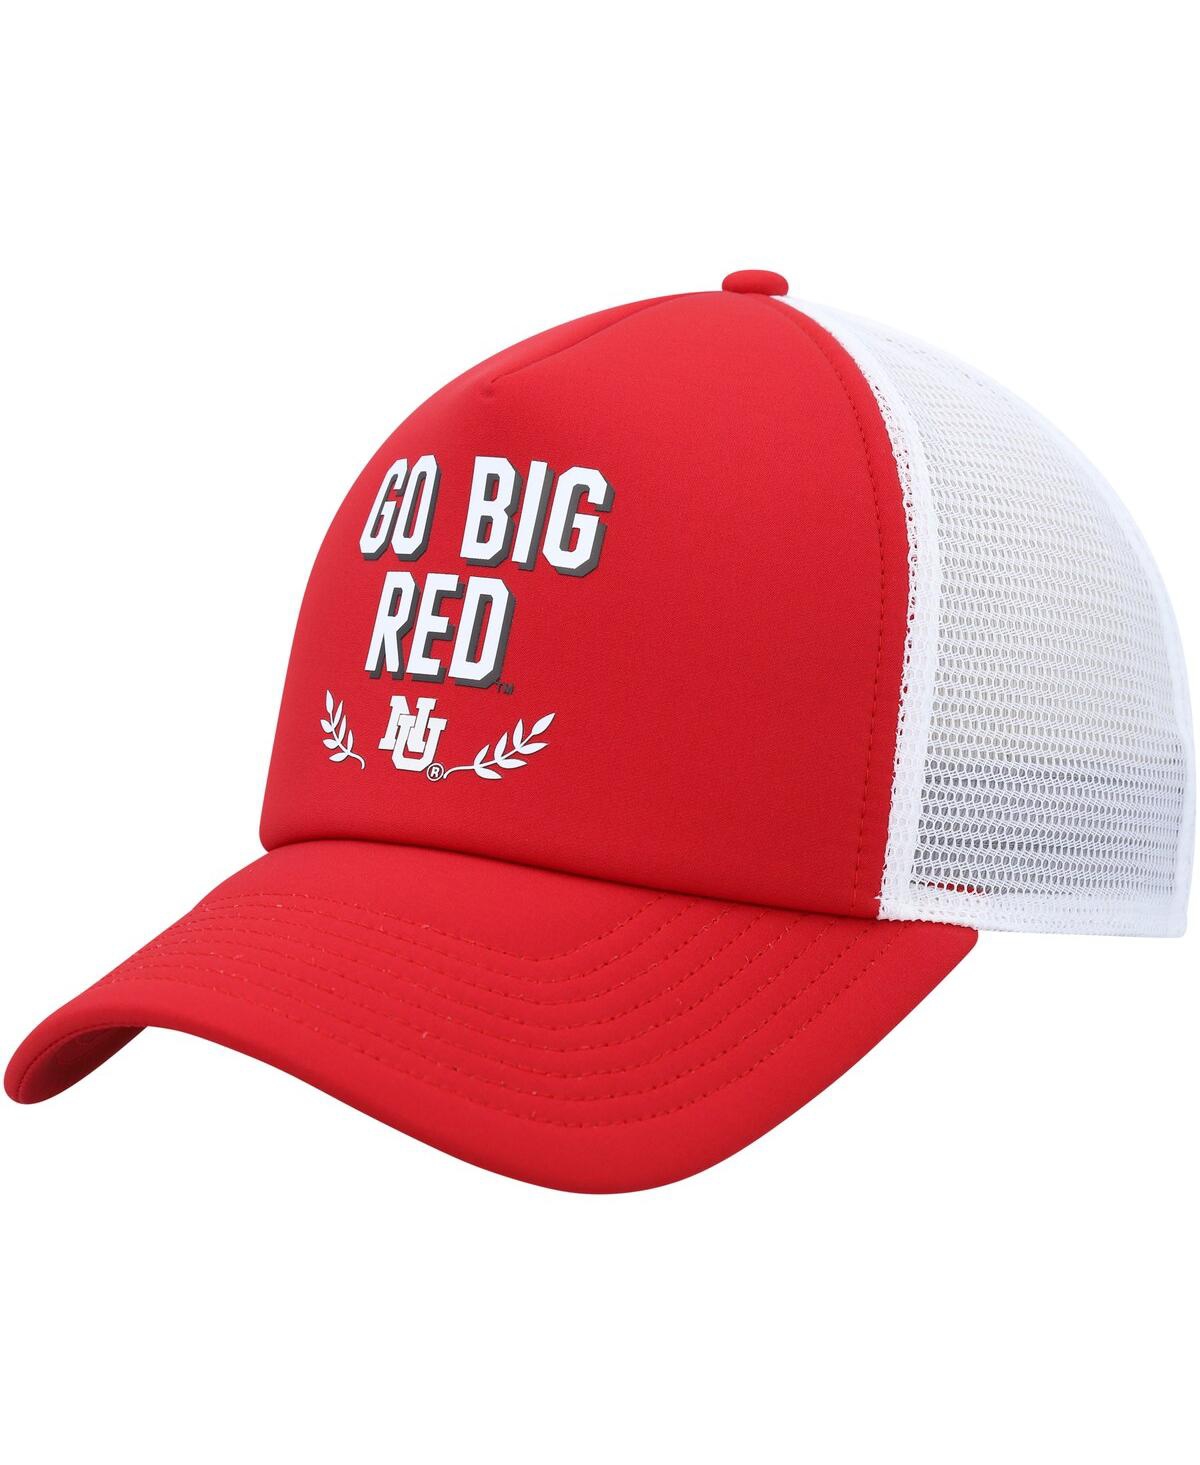 Adidas Originals Men's Adidas Scarlet Nebraska Huskers Phrase Foam Front Trucker Adjustable Hat